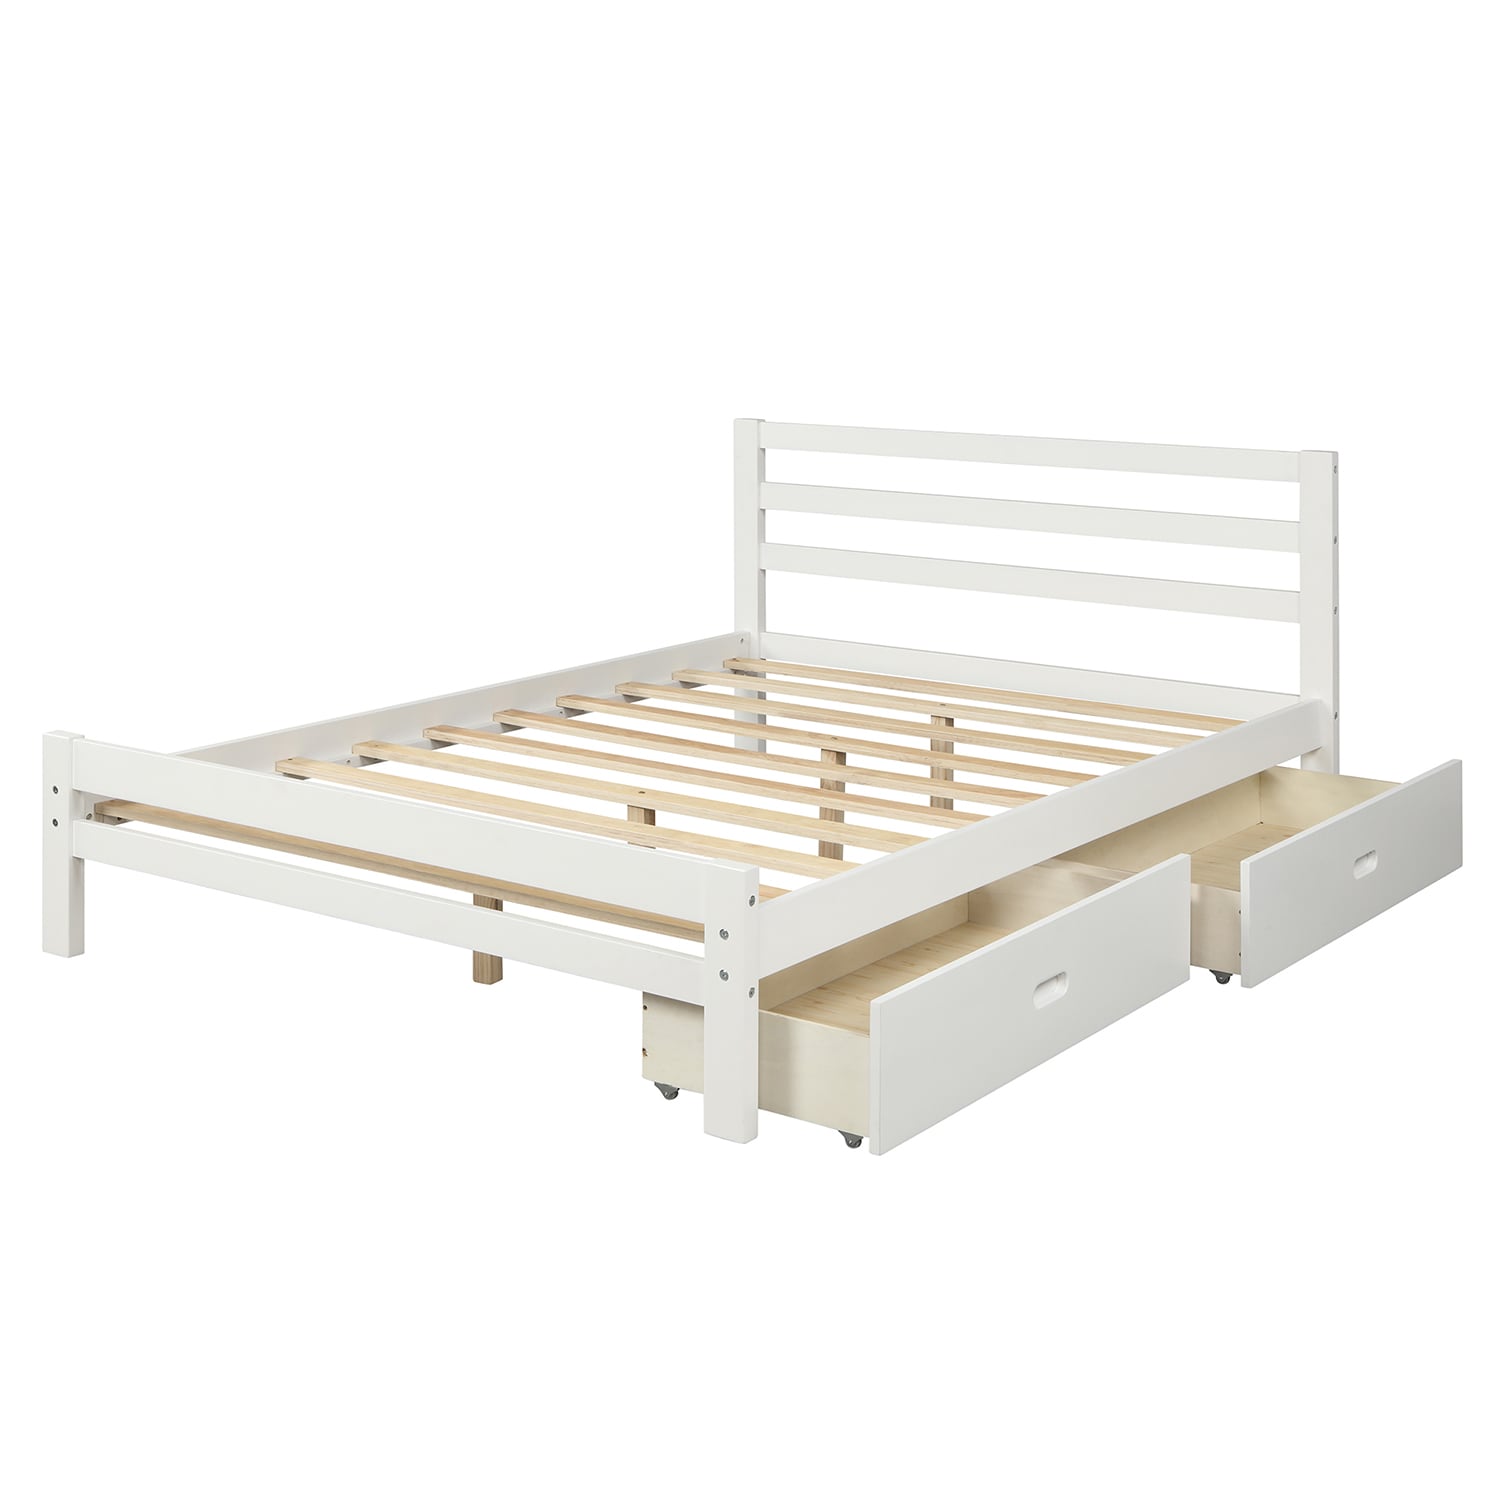 Mondawe White Full Wood Platform Bed with Storage at Lowes.com